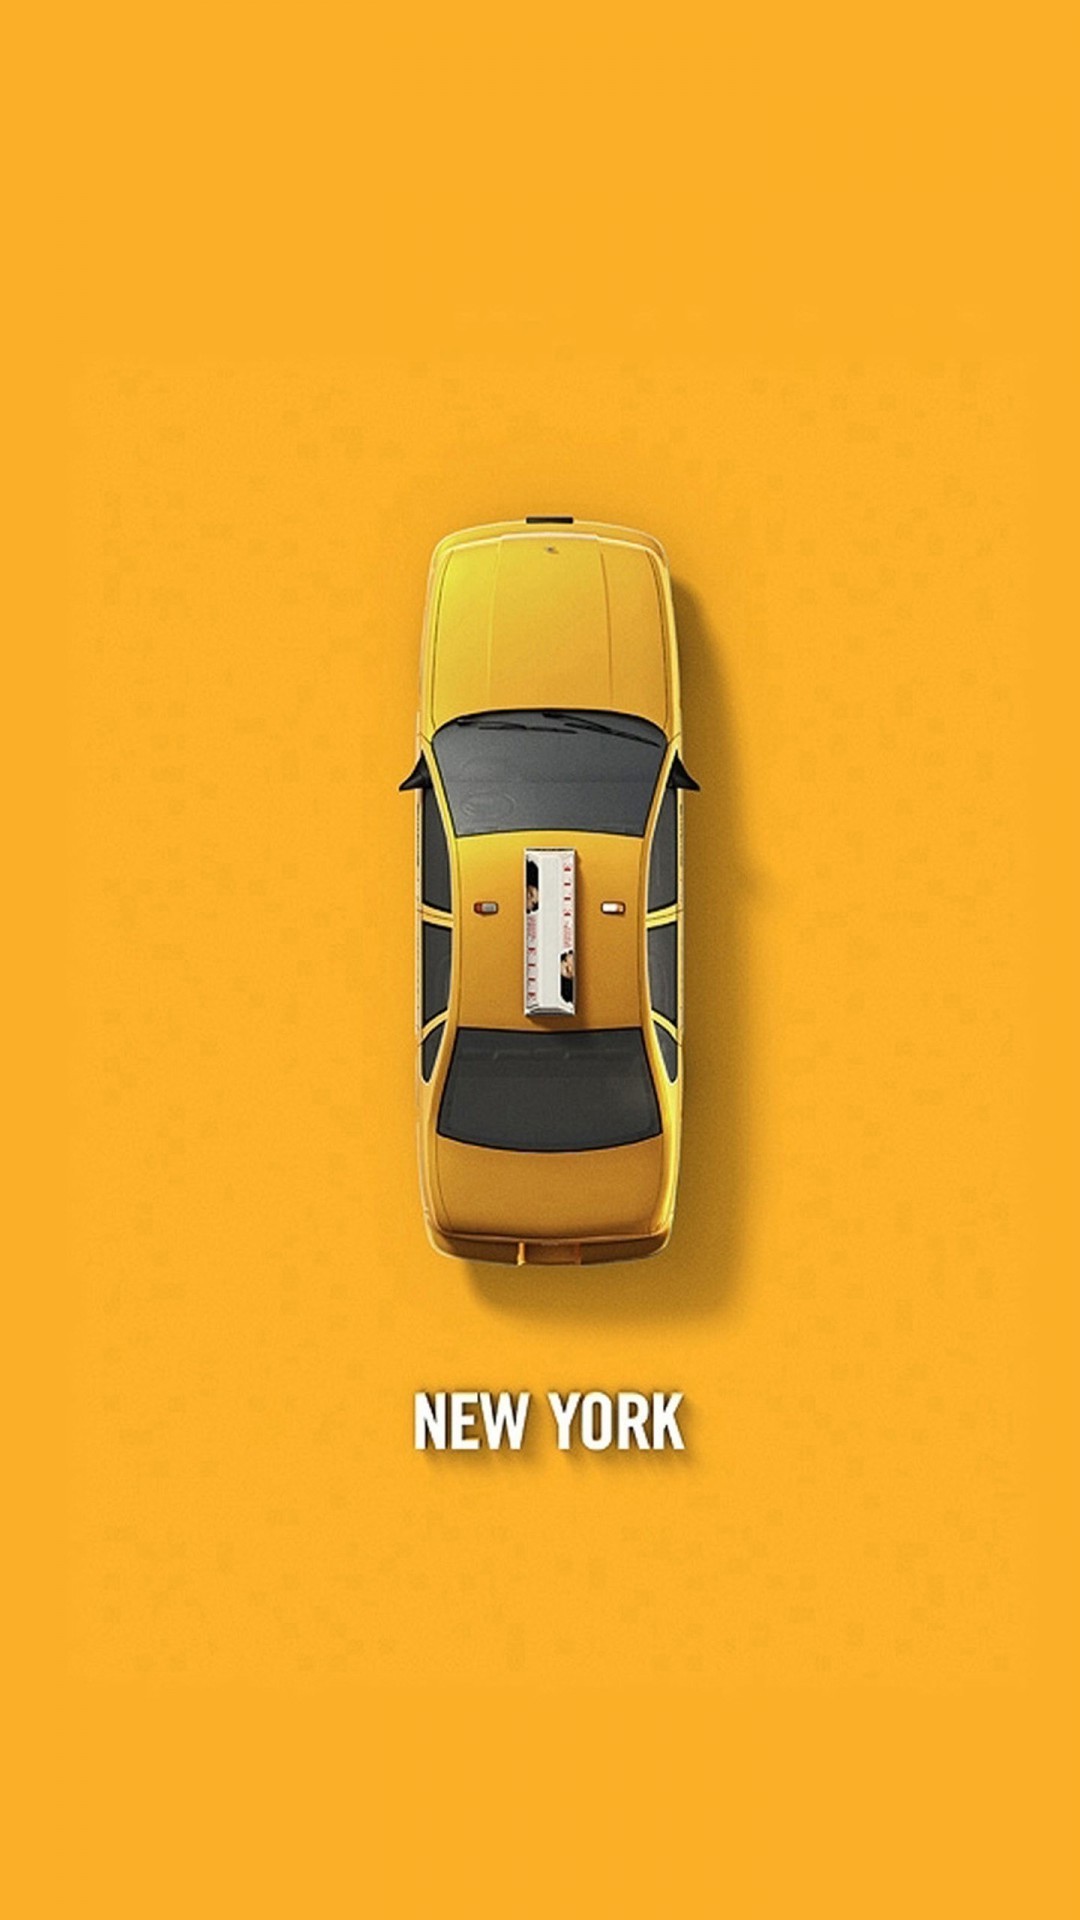 1080x1920 New York's Taxi